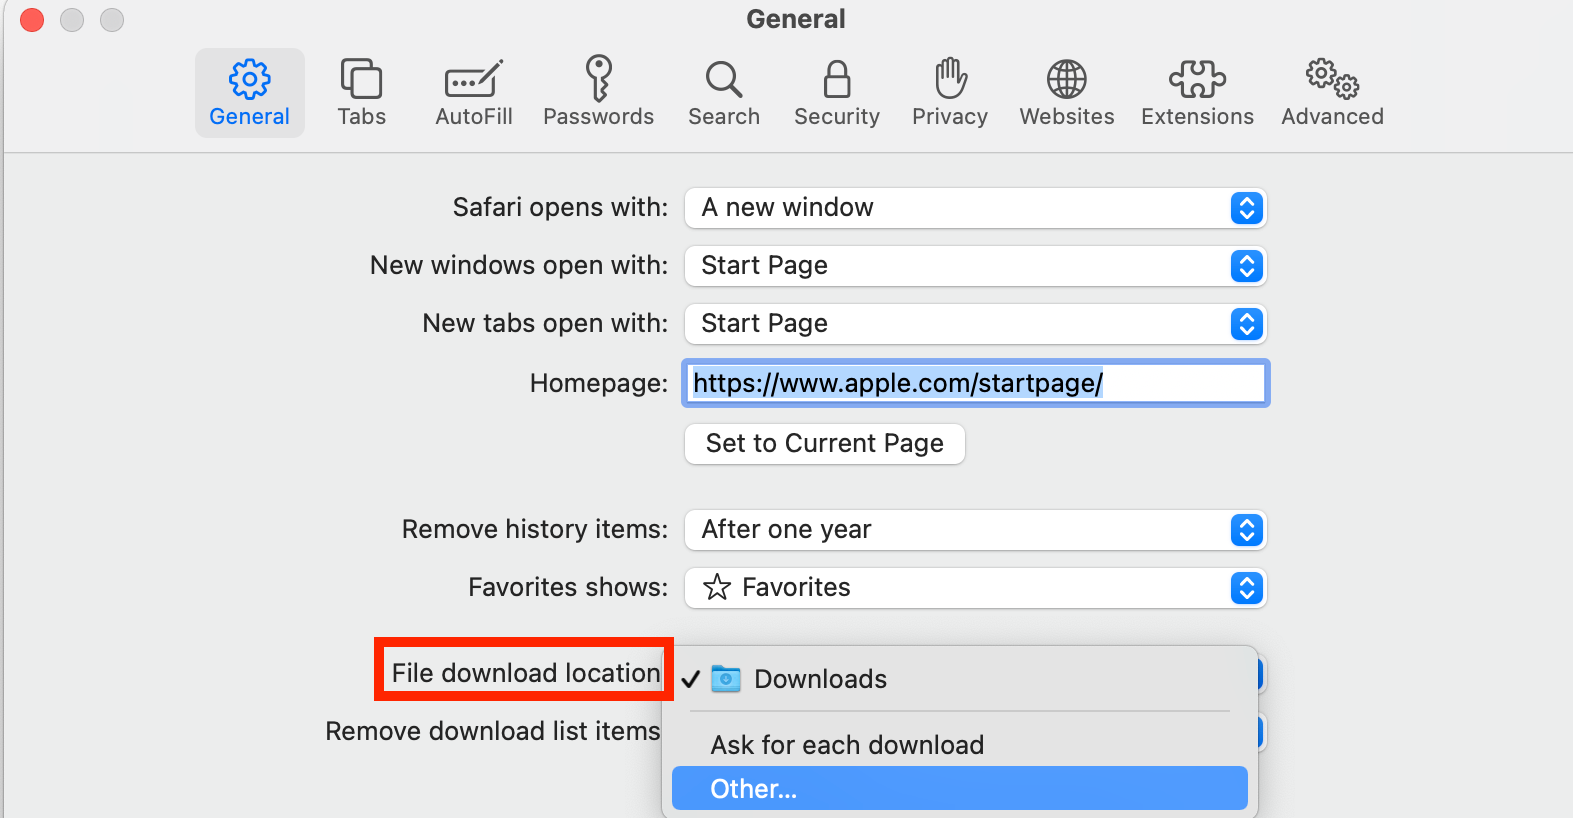 File Download Location Options on Safari Preferences